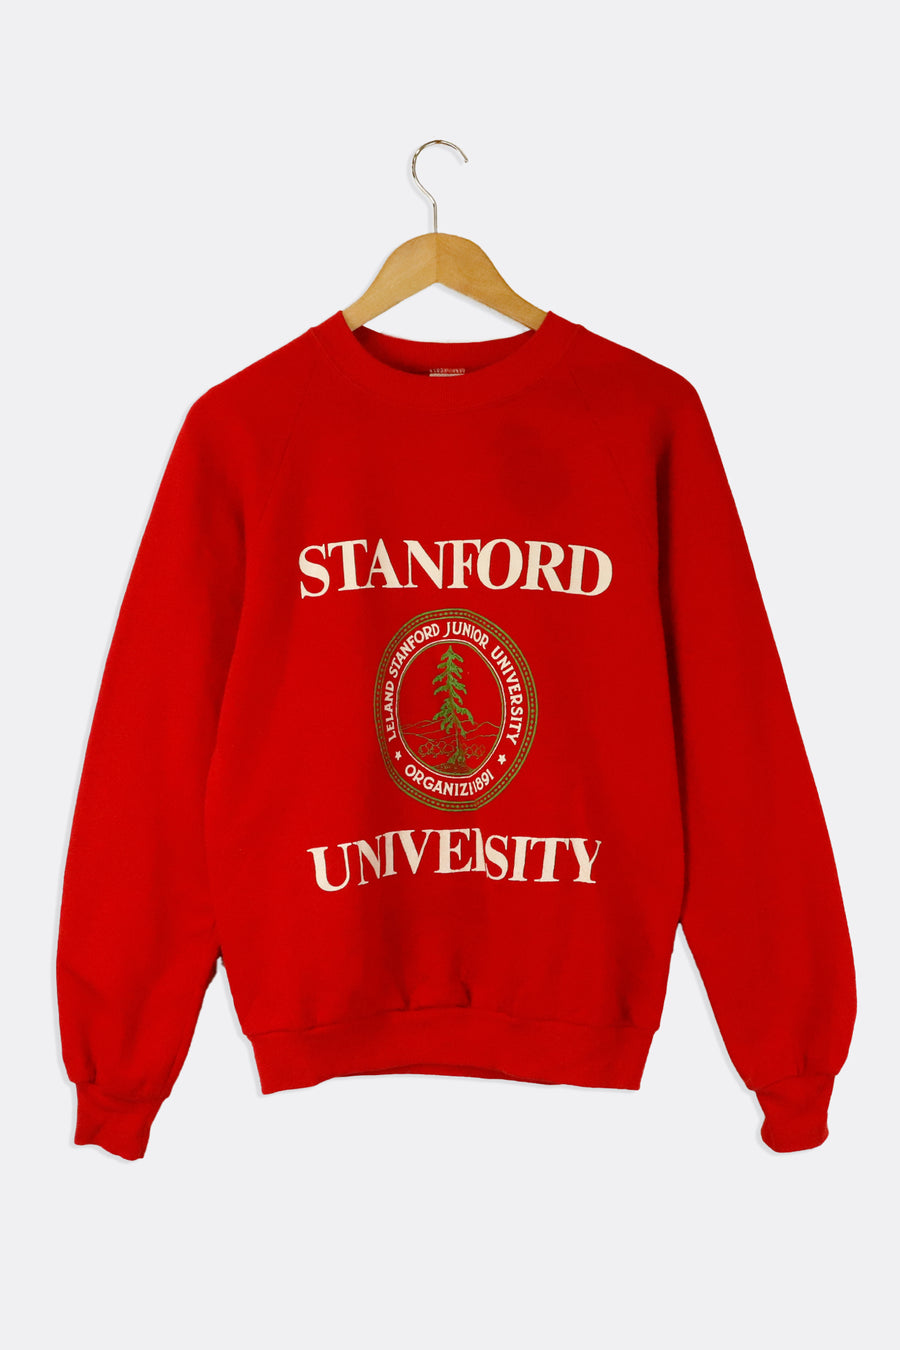 Vintage Standford University Vinyl Circle Logo With Pine Tree In Center White Font Sweatshirt Sz M